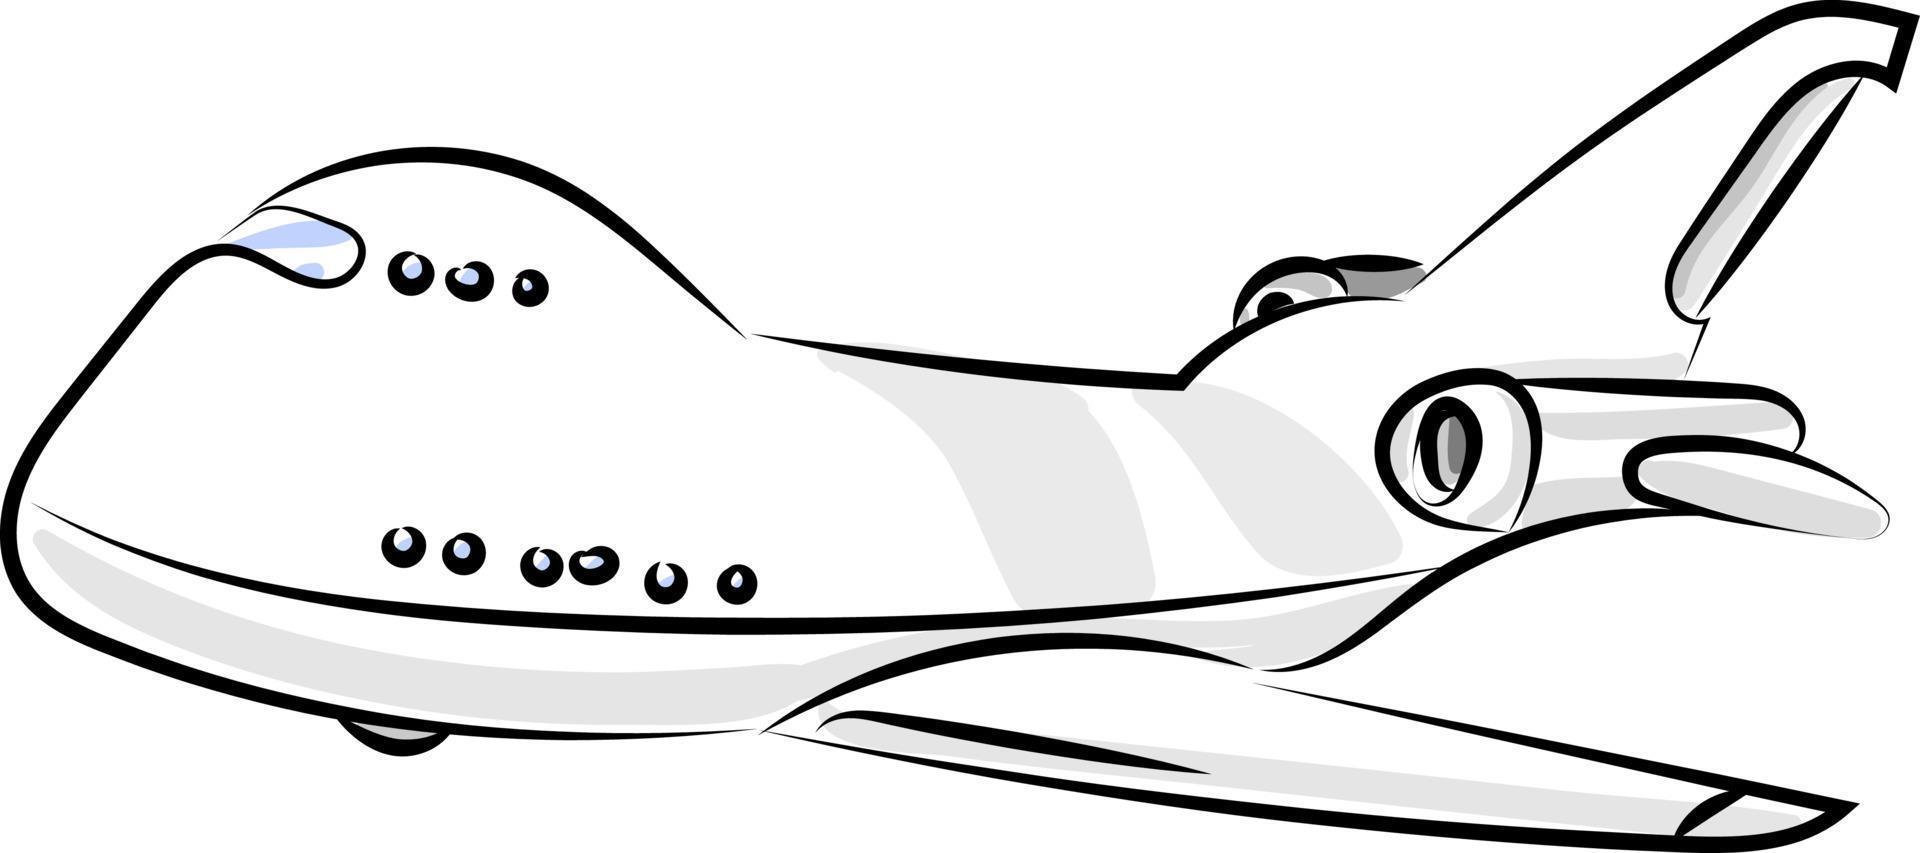 Big ariplane, illustration, vector on white background.